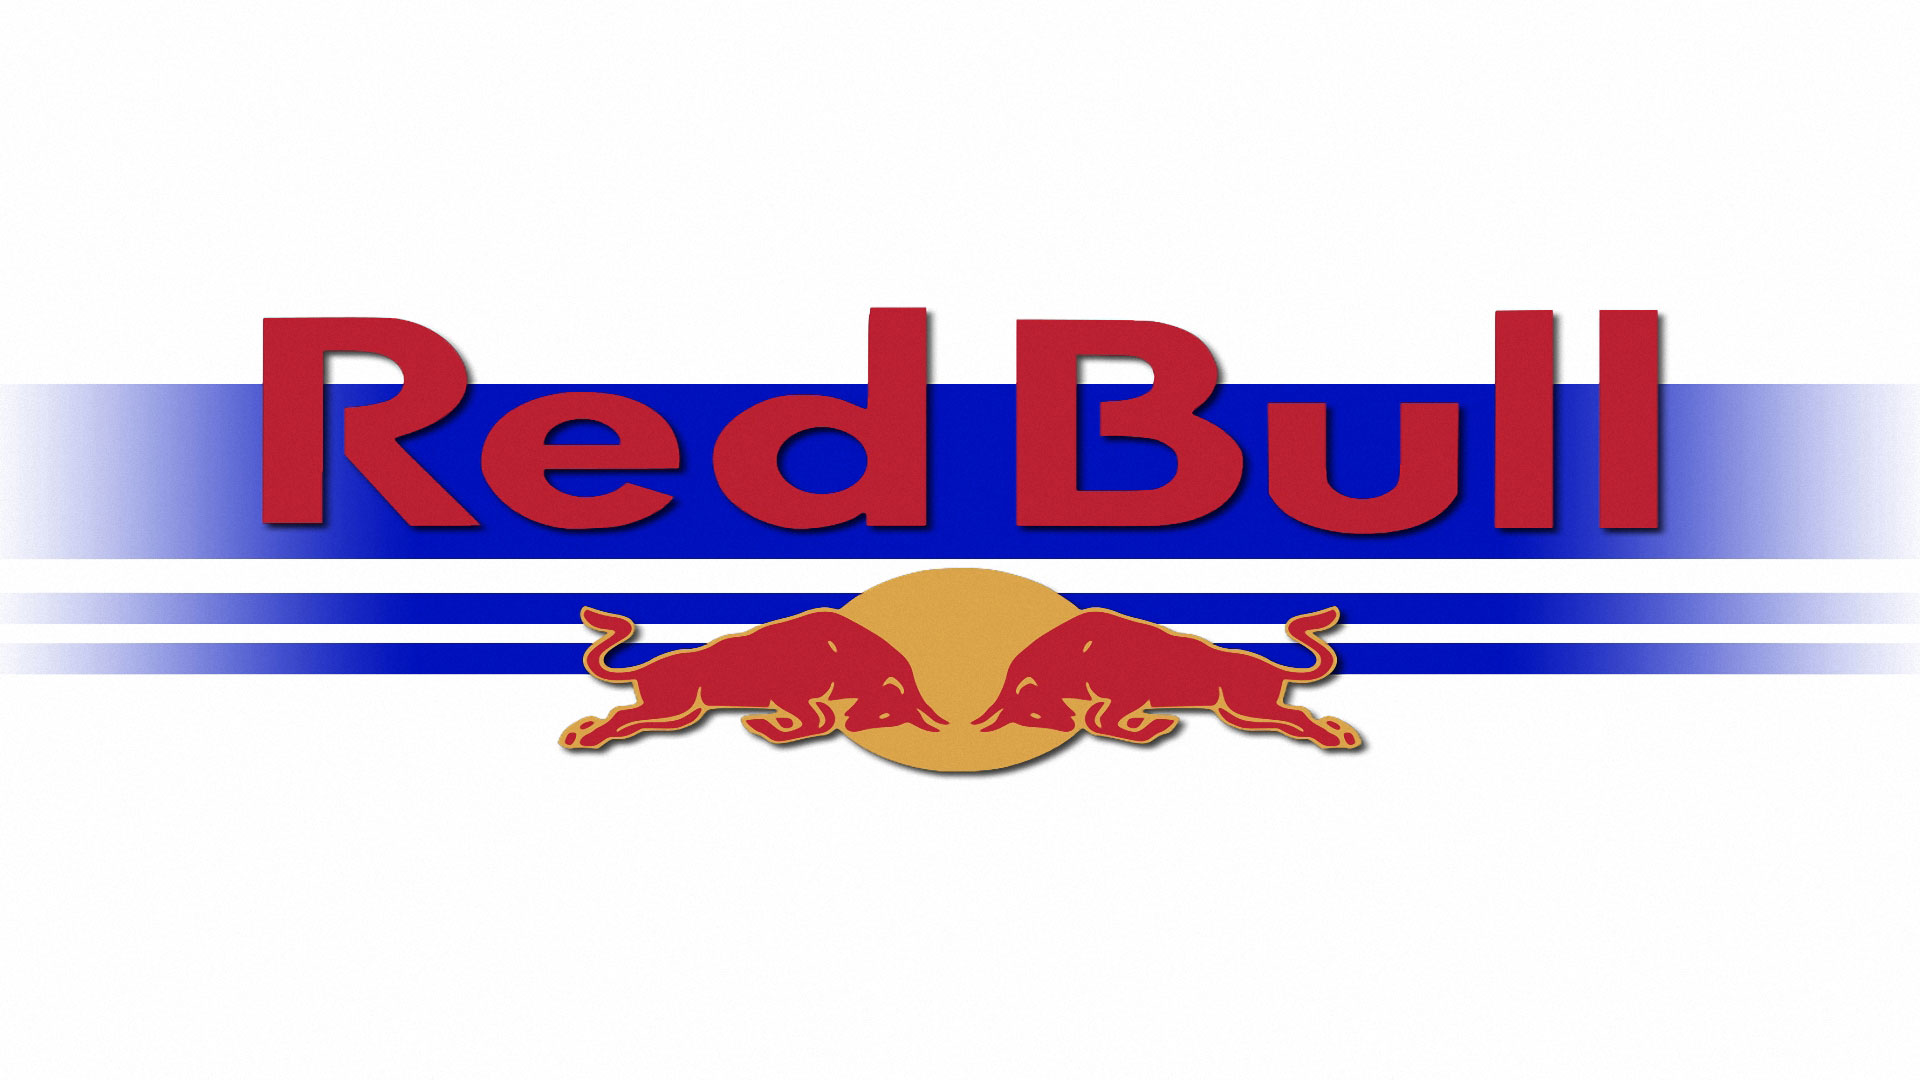 Free Download Red Bull Logo Wallpaper 19x1080 For Your Desktop Mobile Tablet Explore 71 Red Bull Logo Wallpaper Hd Red Wallpaper Red Bull Wallpaper Red Bull Racing Wallpaper